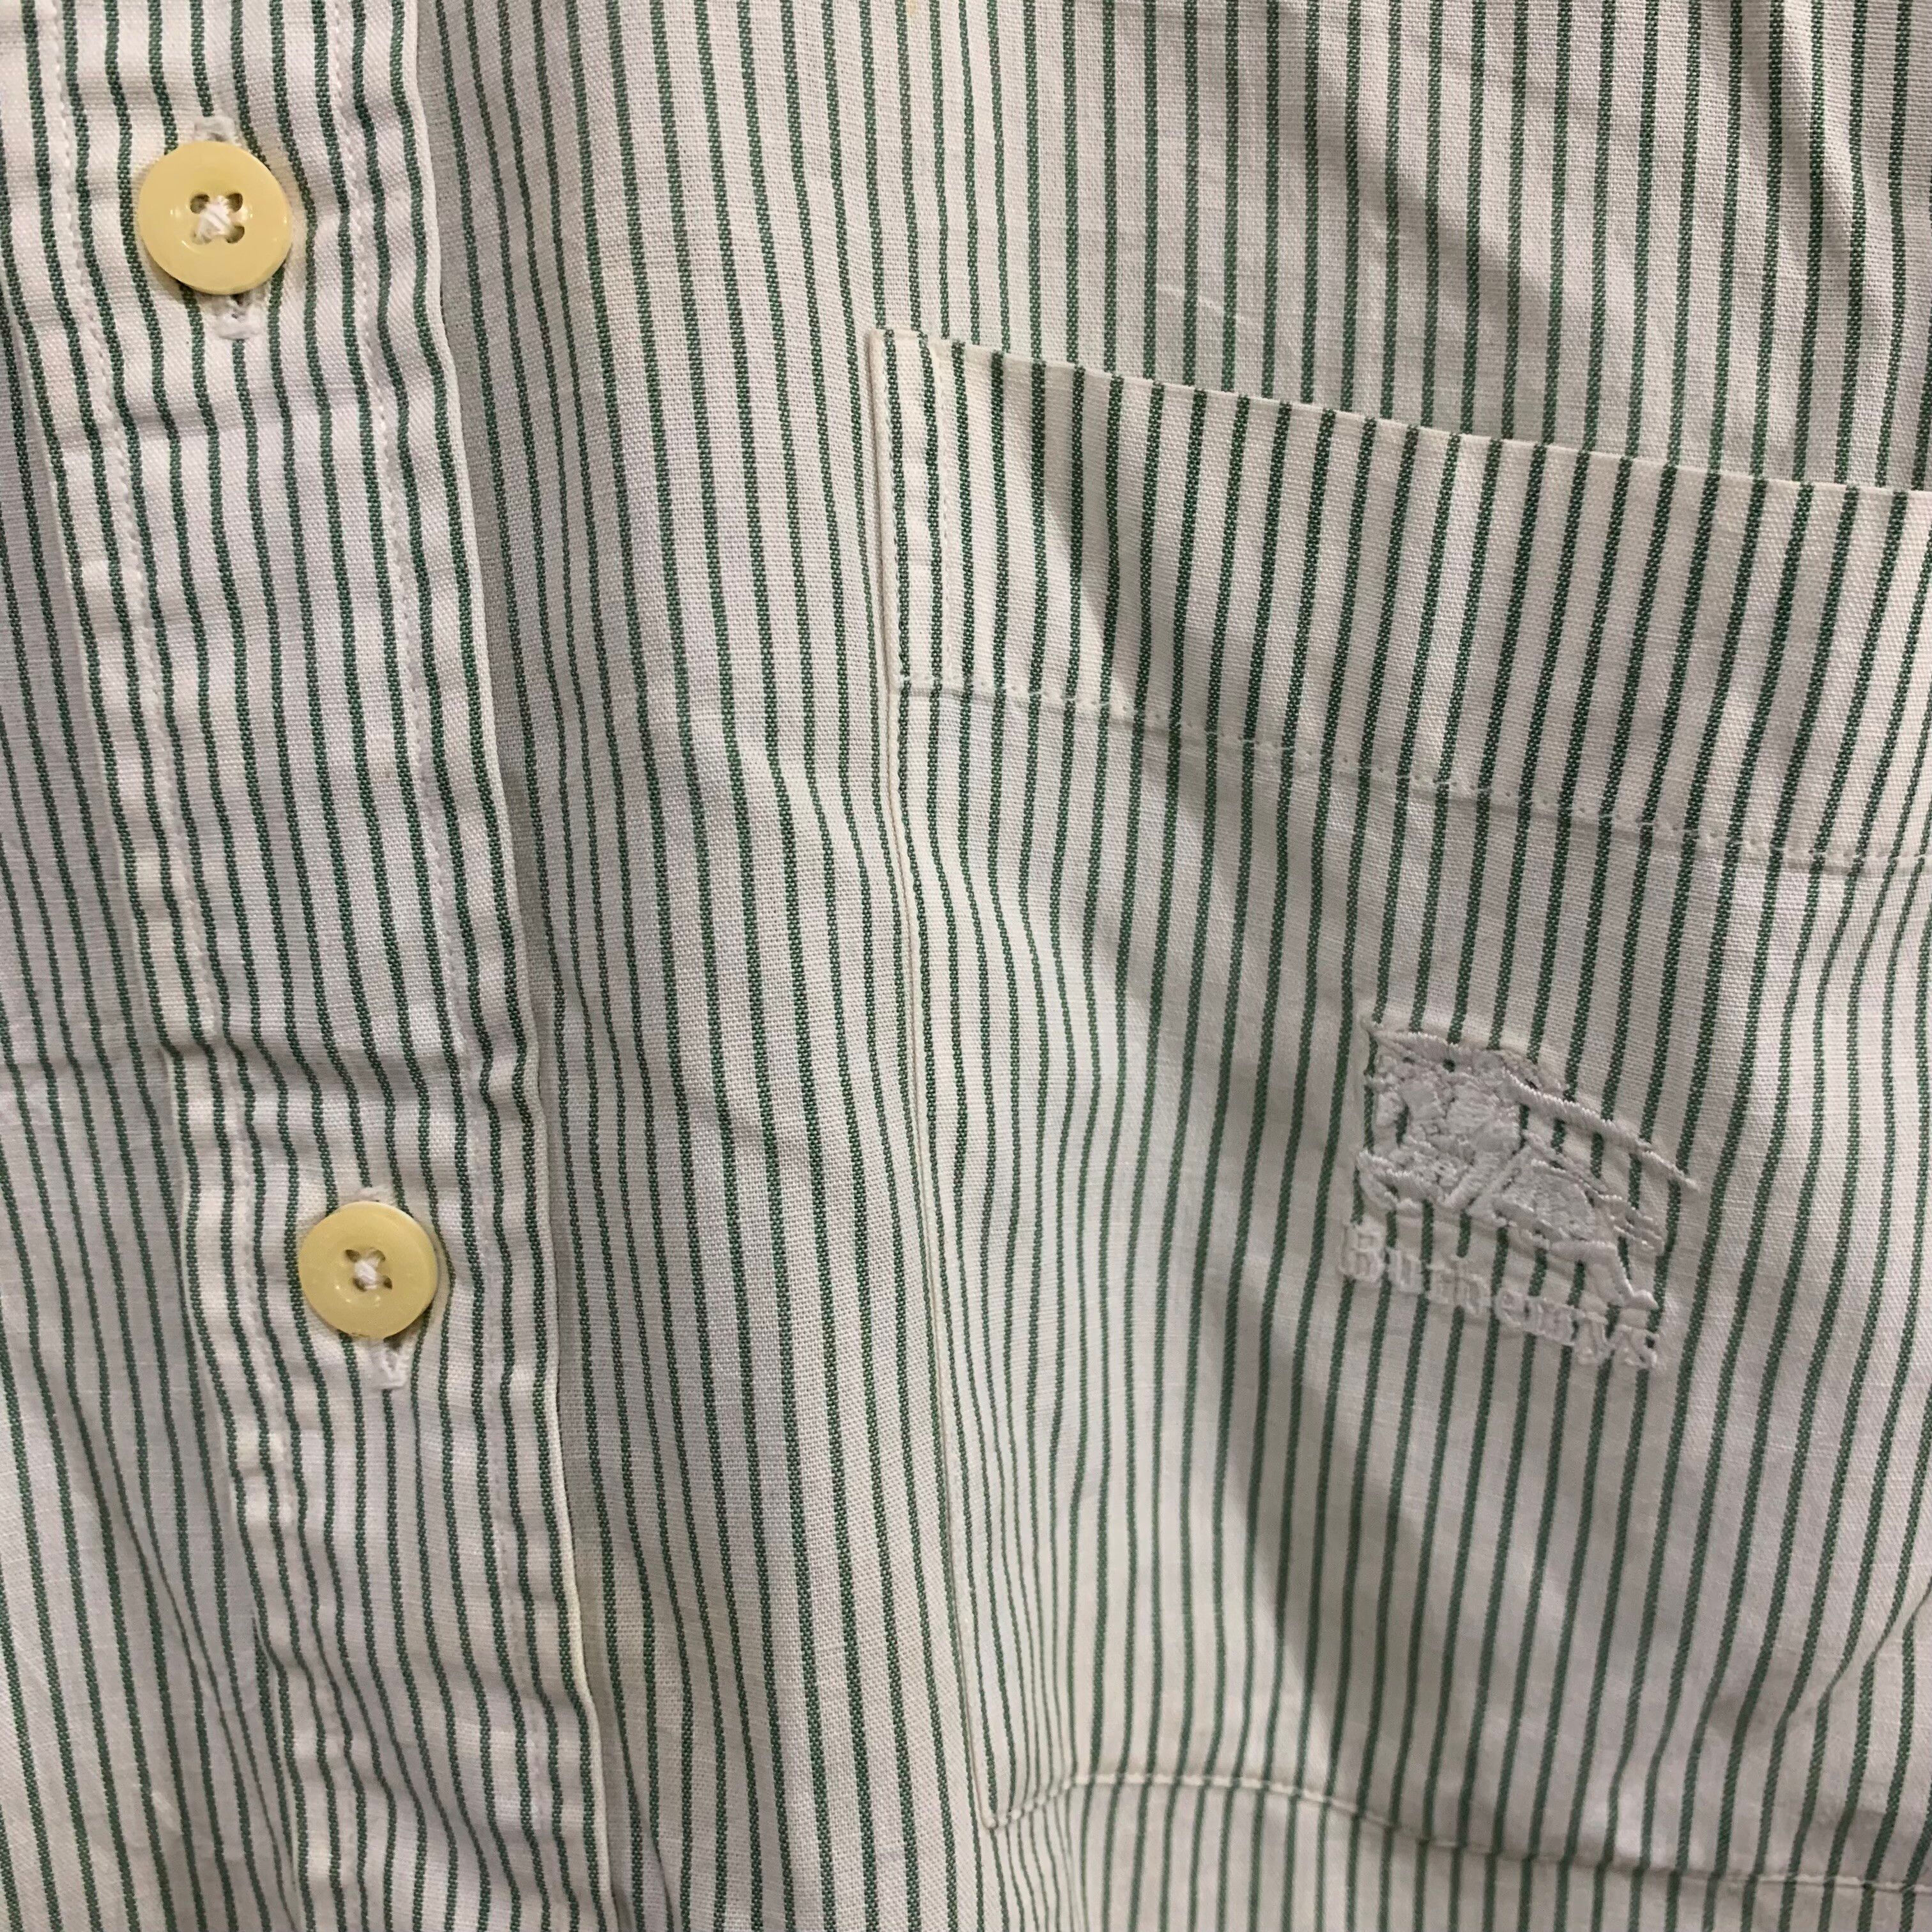 Burberry Vintage Burberry Striped Longsleeve Shirt Button Up Size US L / EU 52-54 / 3 - 3 Thumbnail